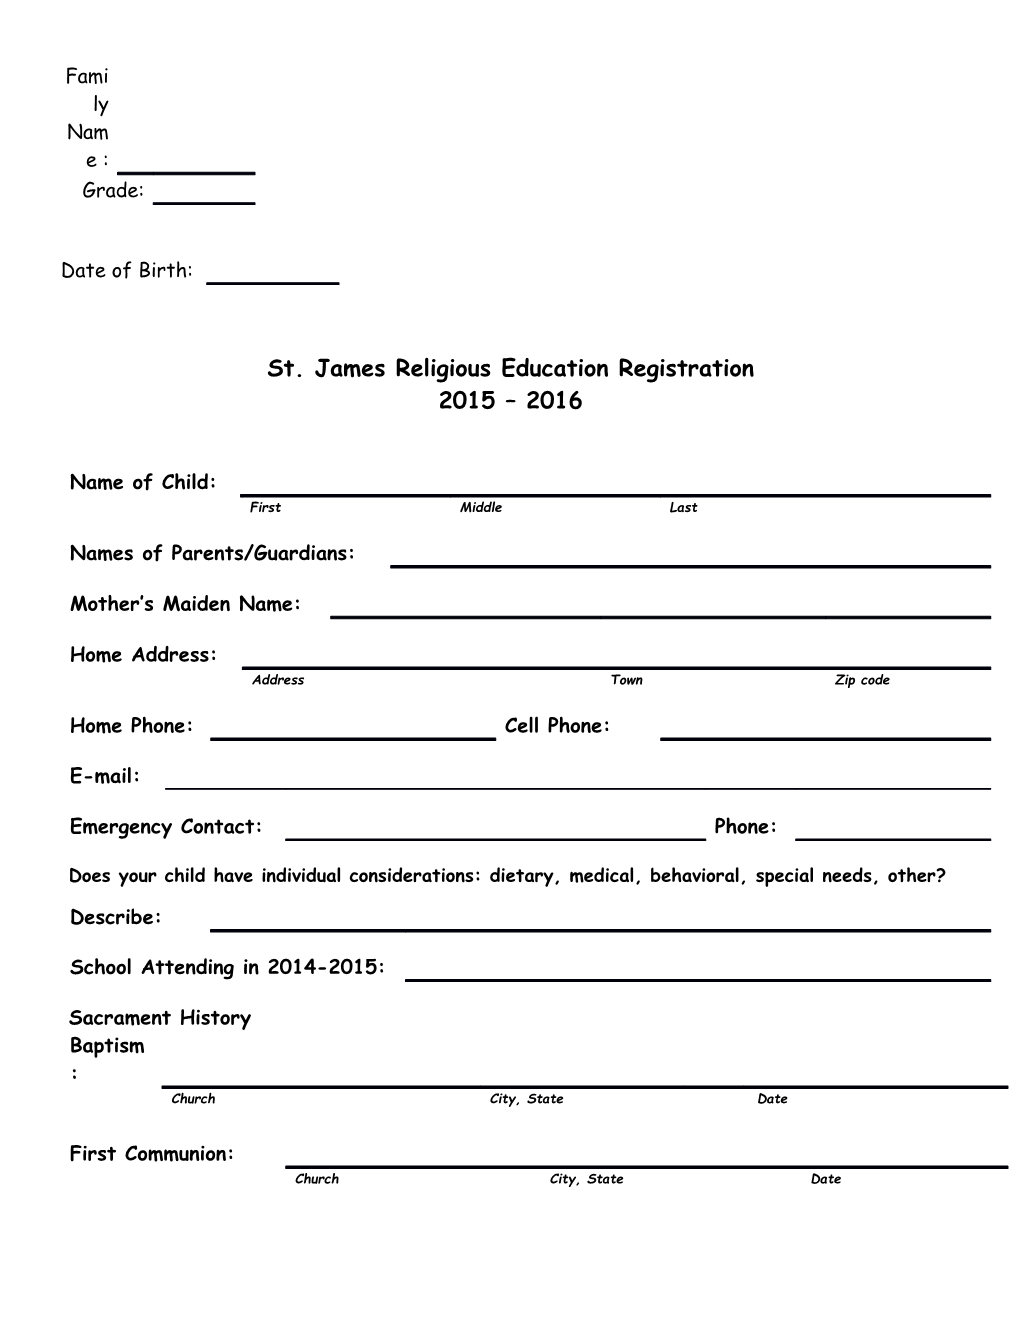 St. James Religious Education Registration